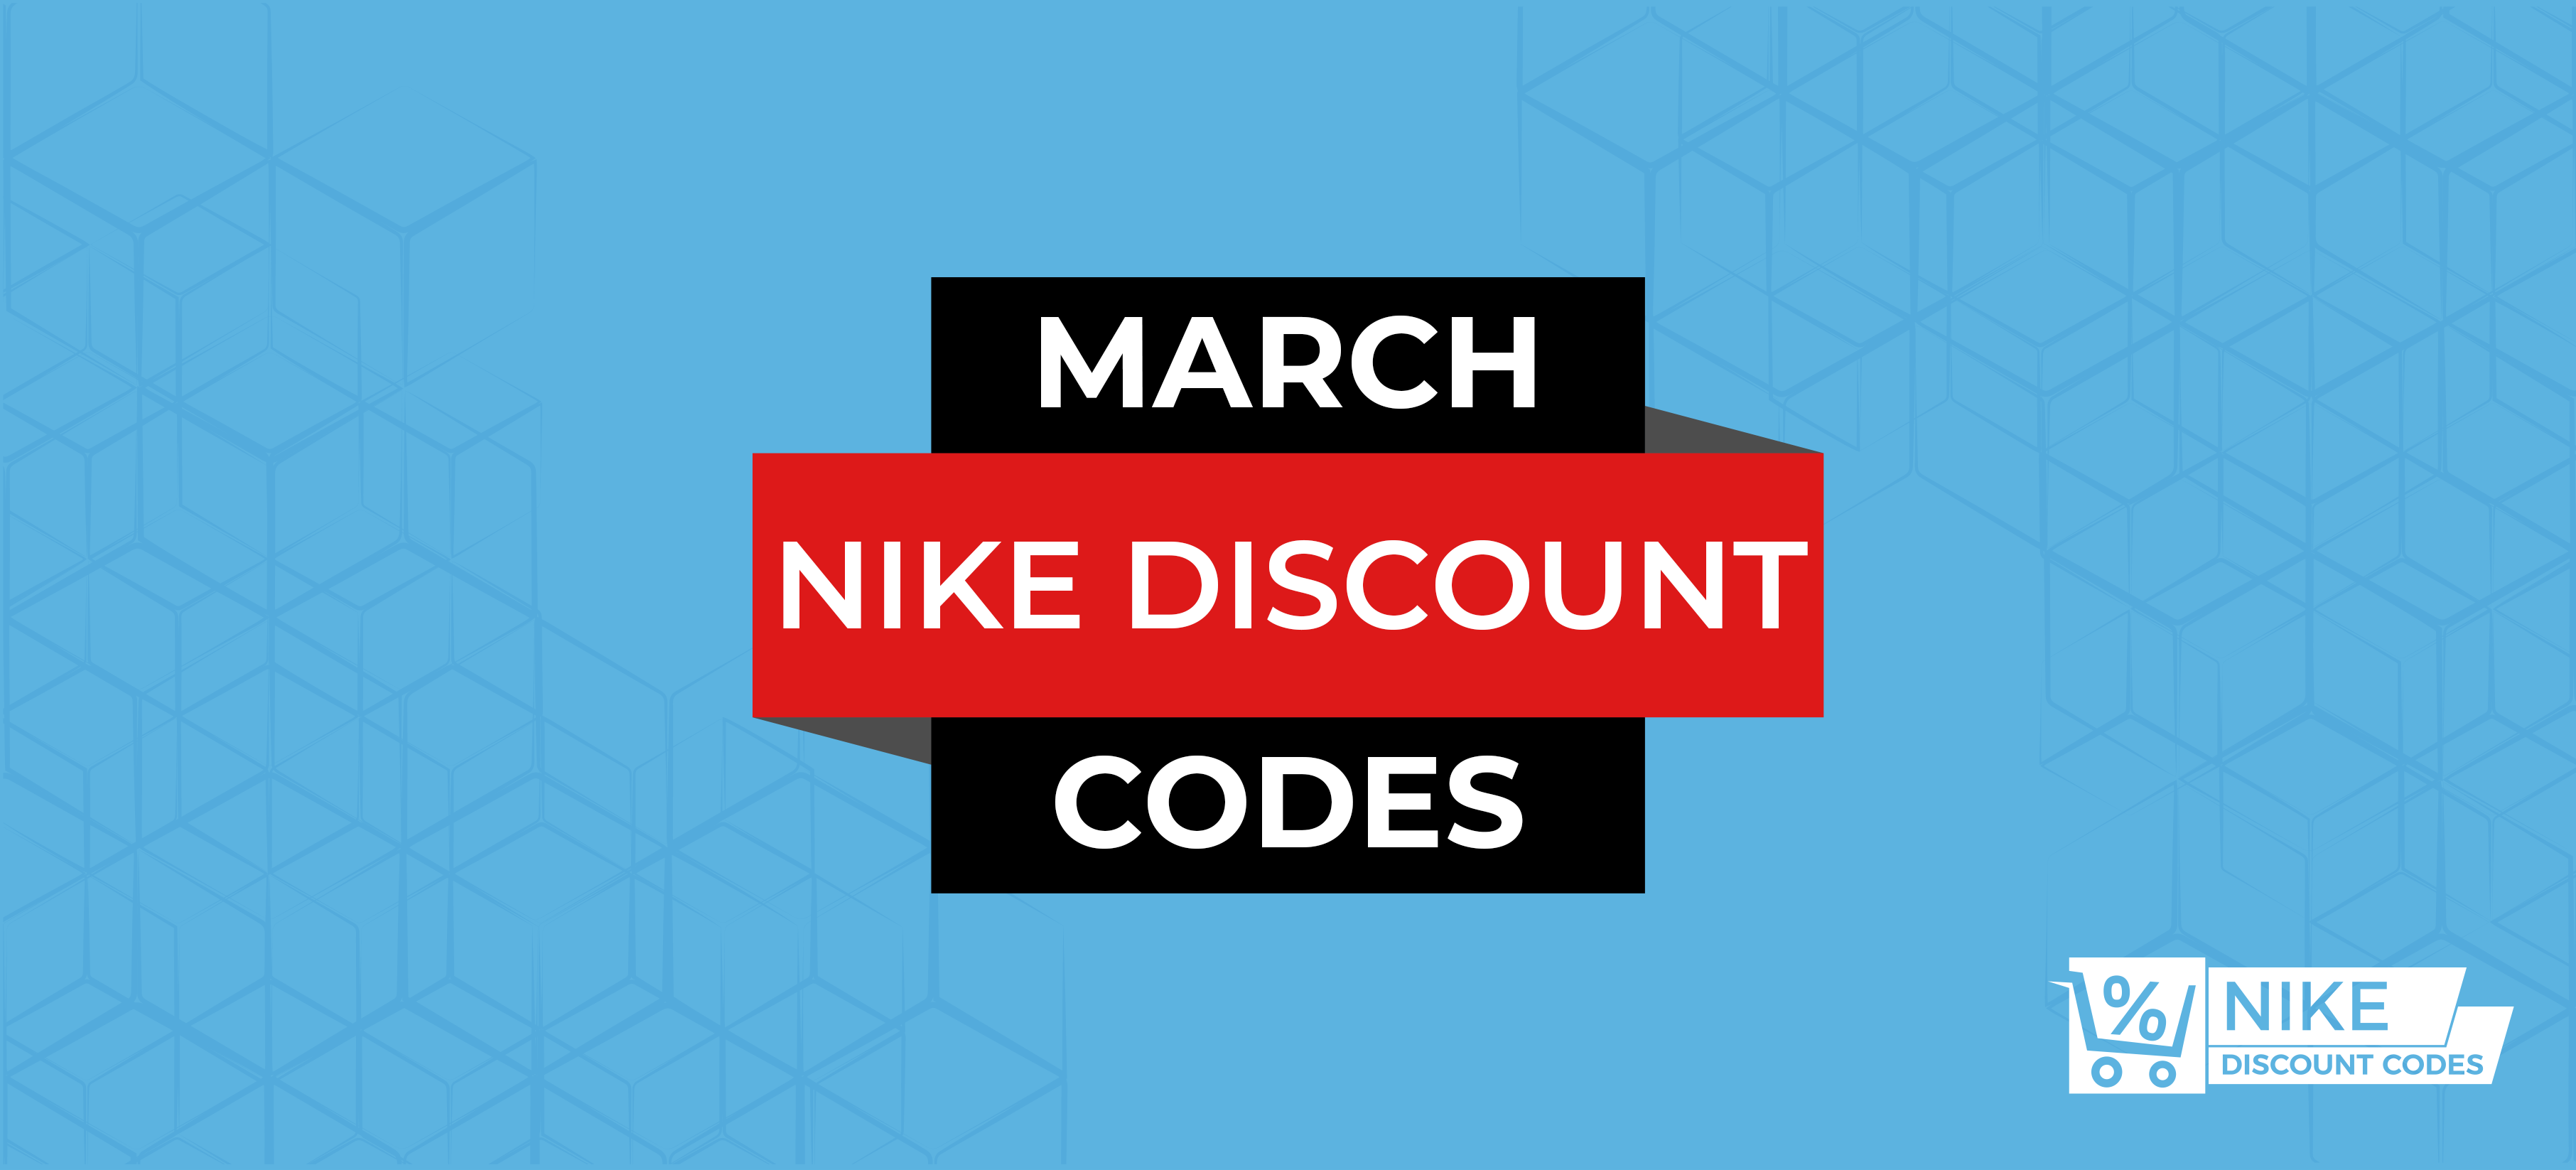 nike coupon codes april 2020